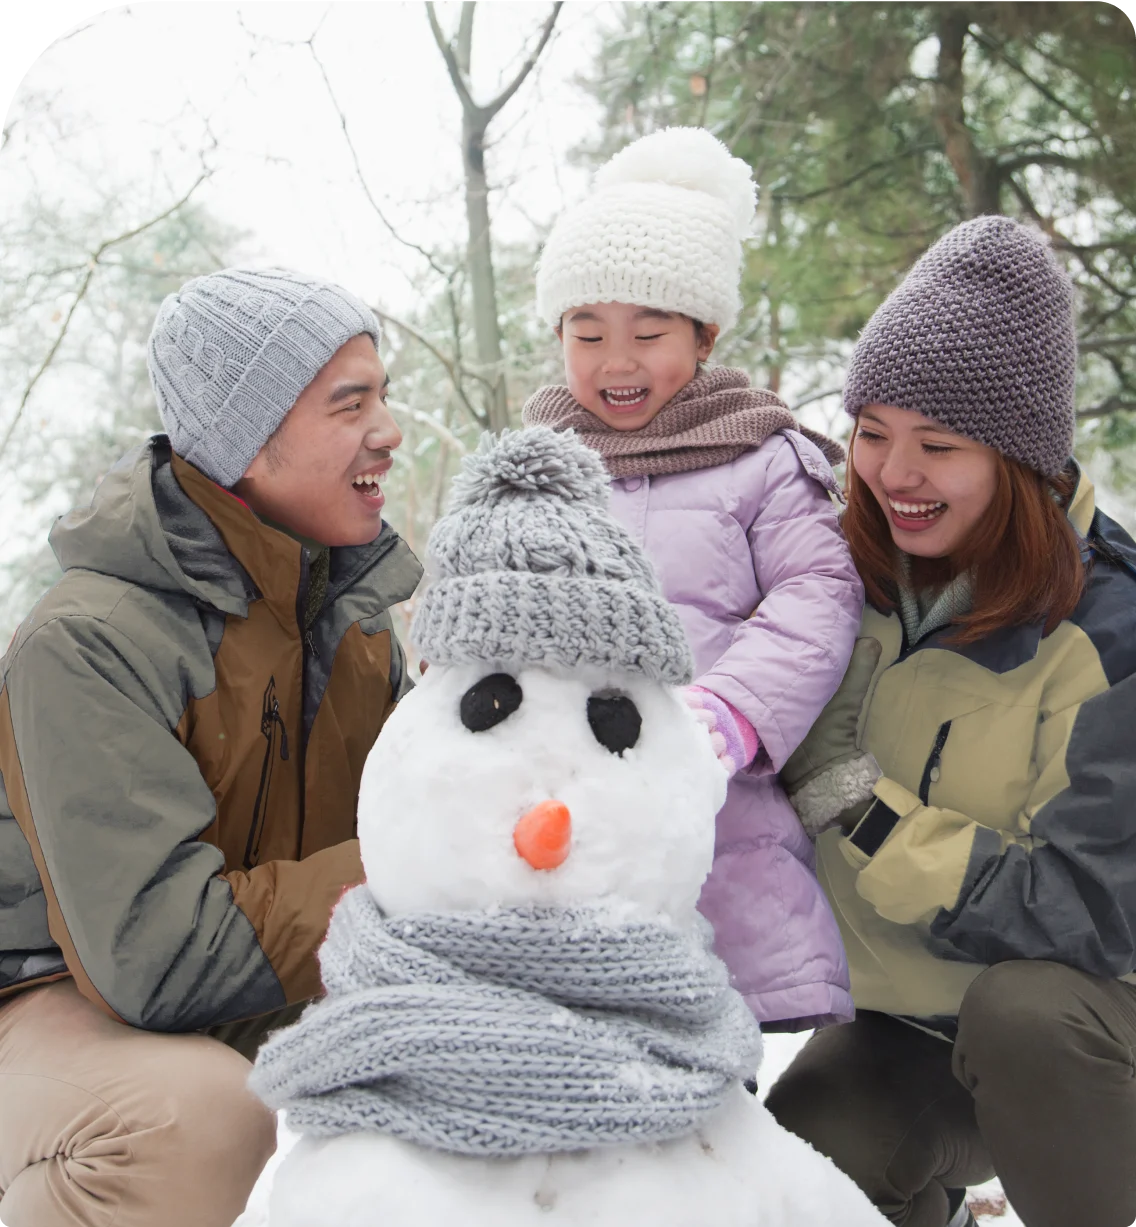 A family builds a snowman.